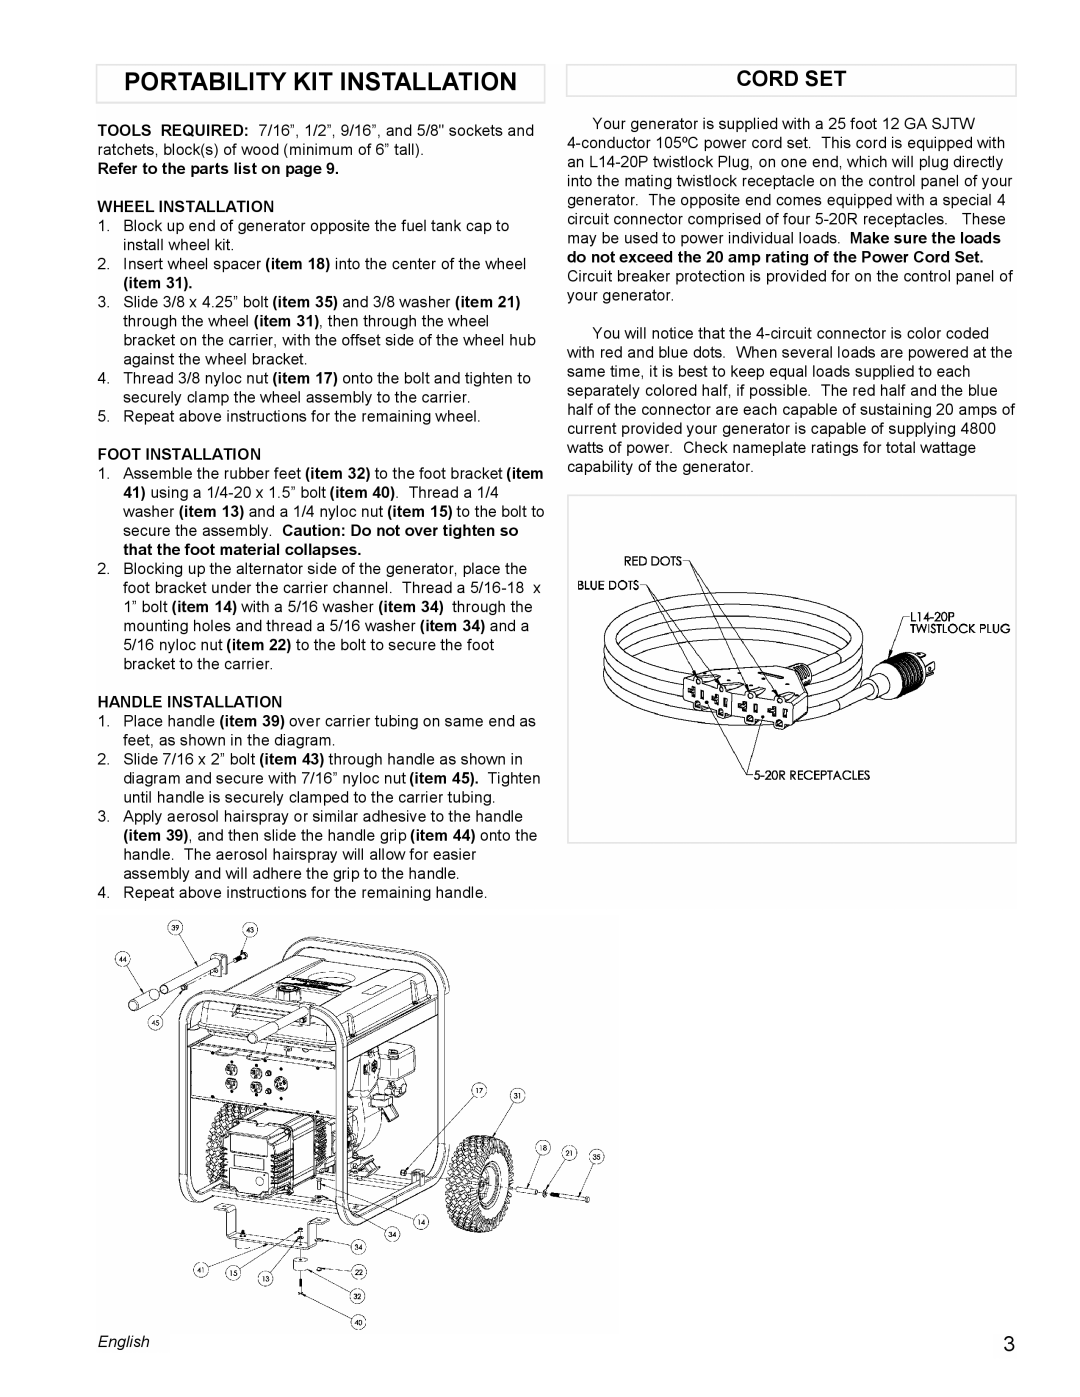 Powermate PM0525501 manual Portability Kit Installation, Cord Set, English 